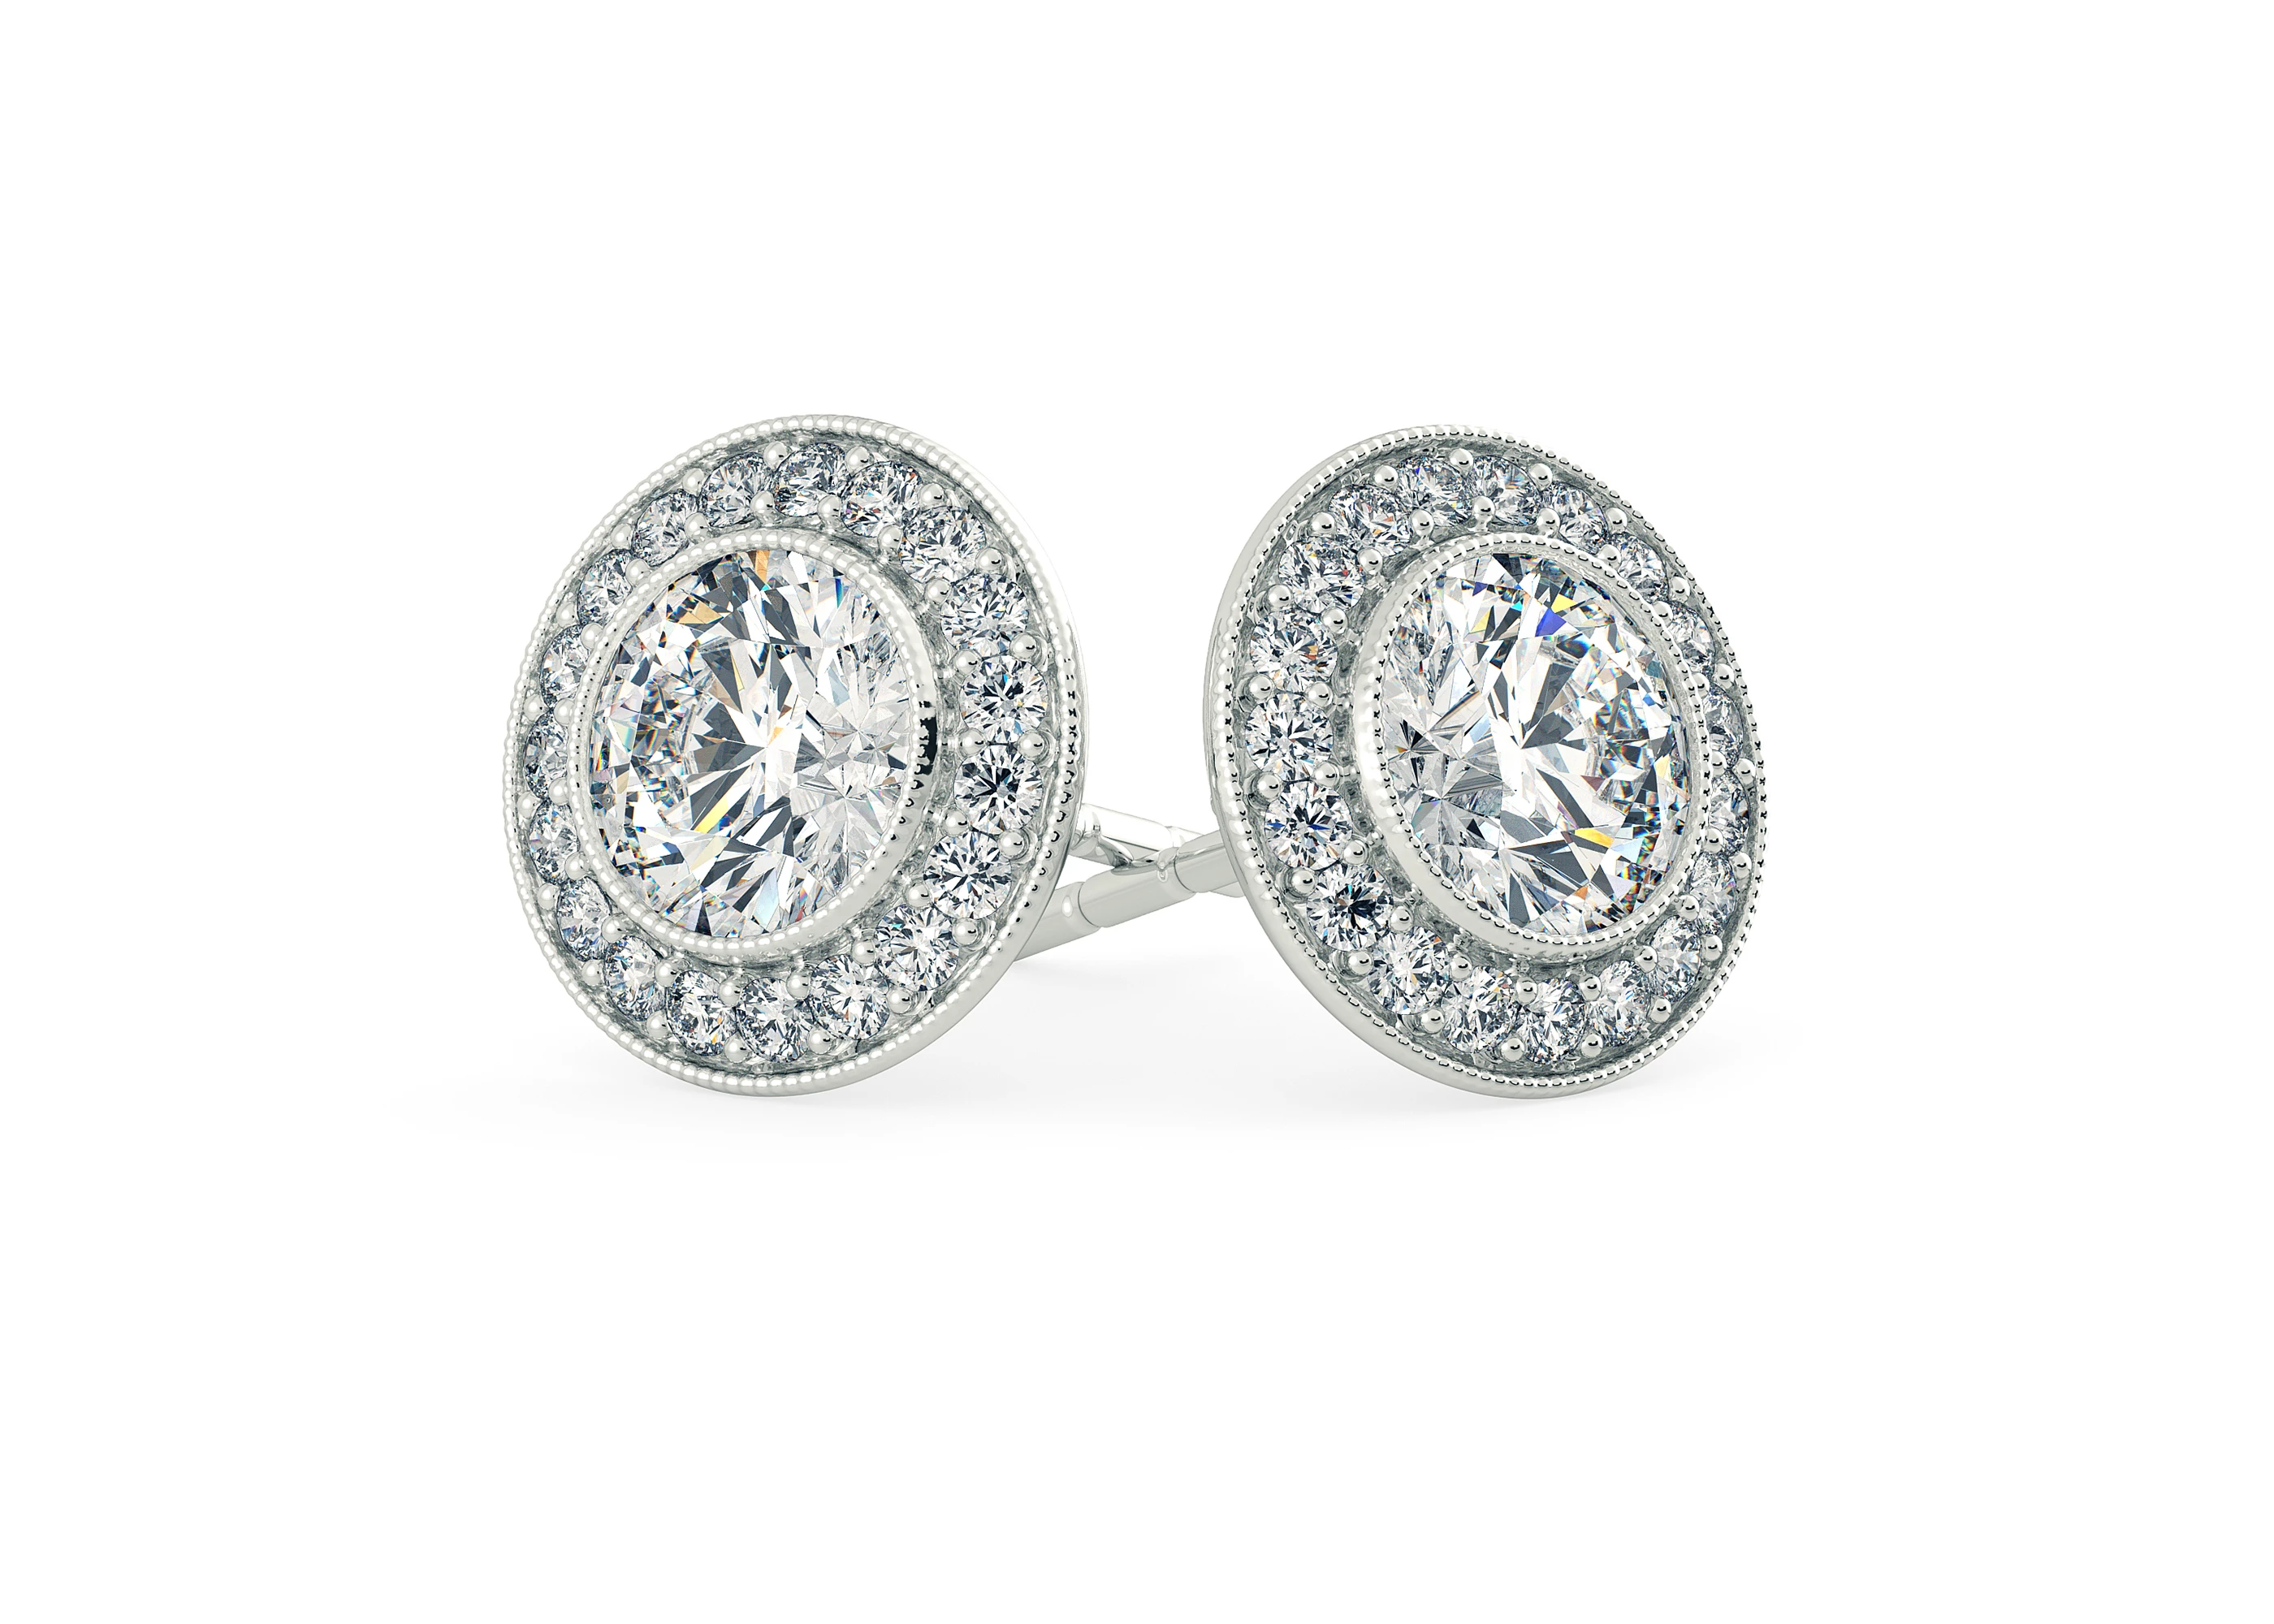 Dante Round Brilliant Diamond Stud Earrings in 18K White Gold with Screw Backs